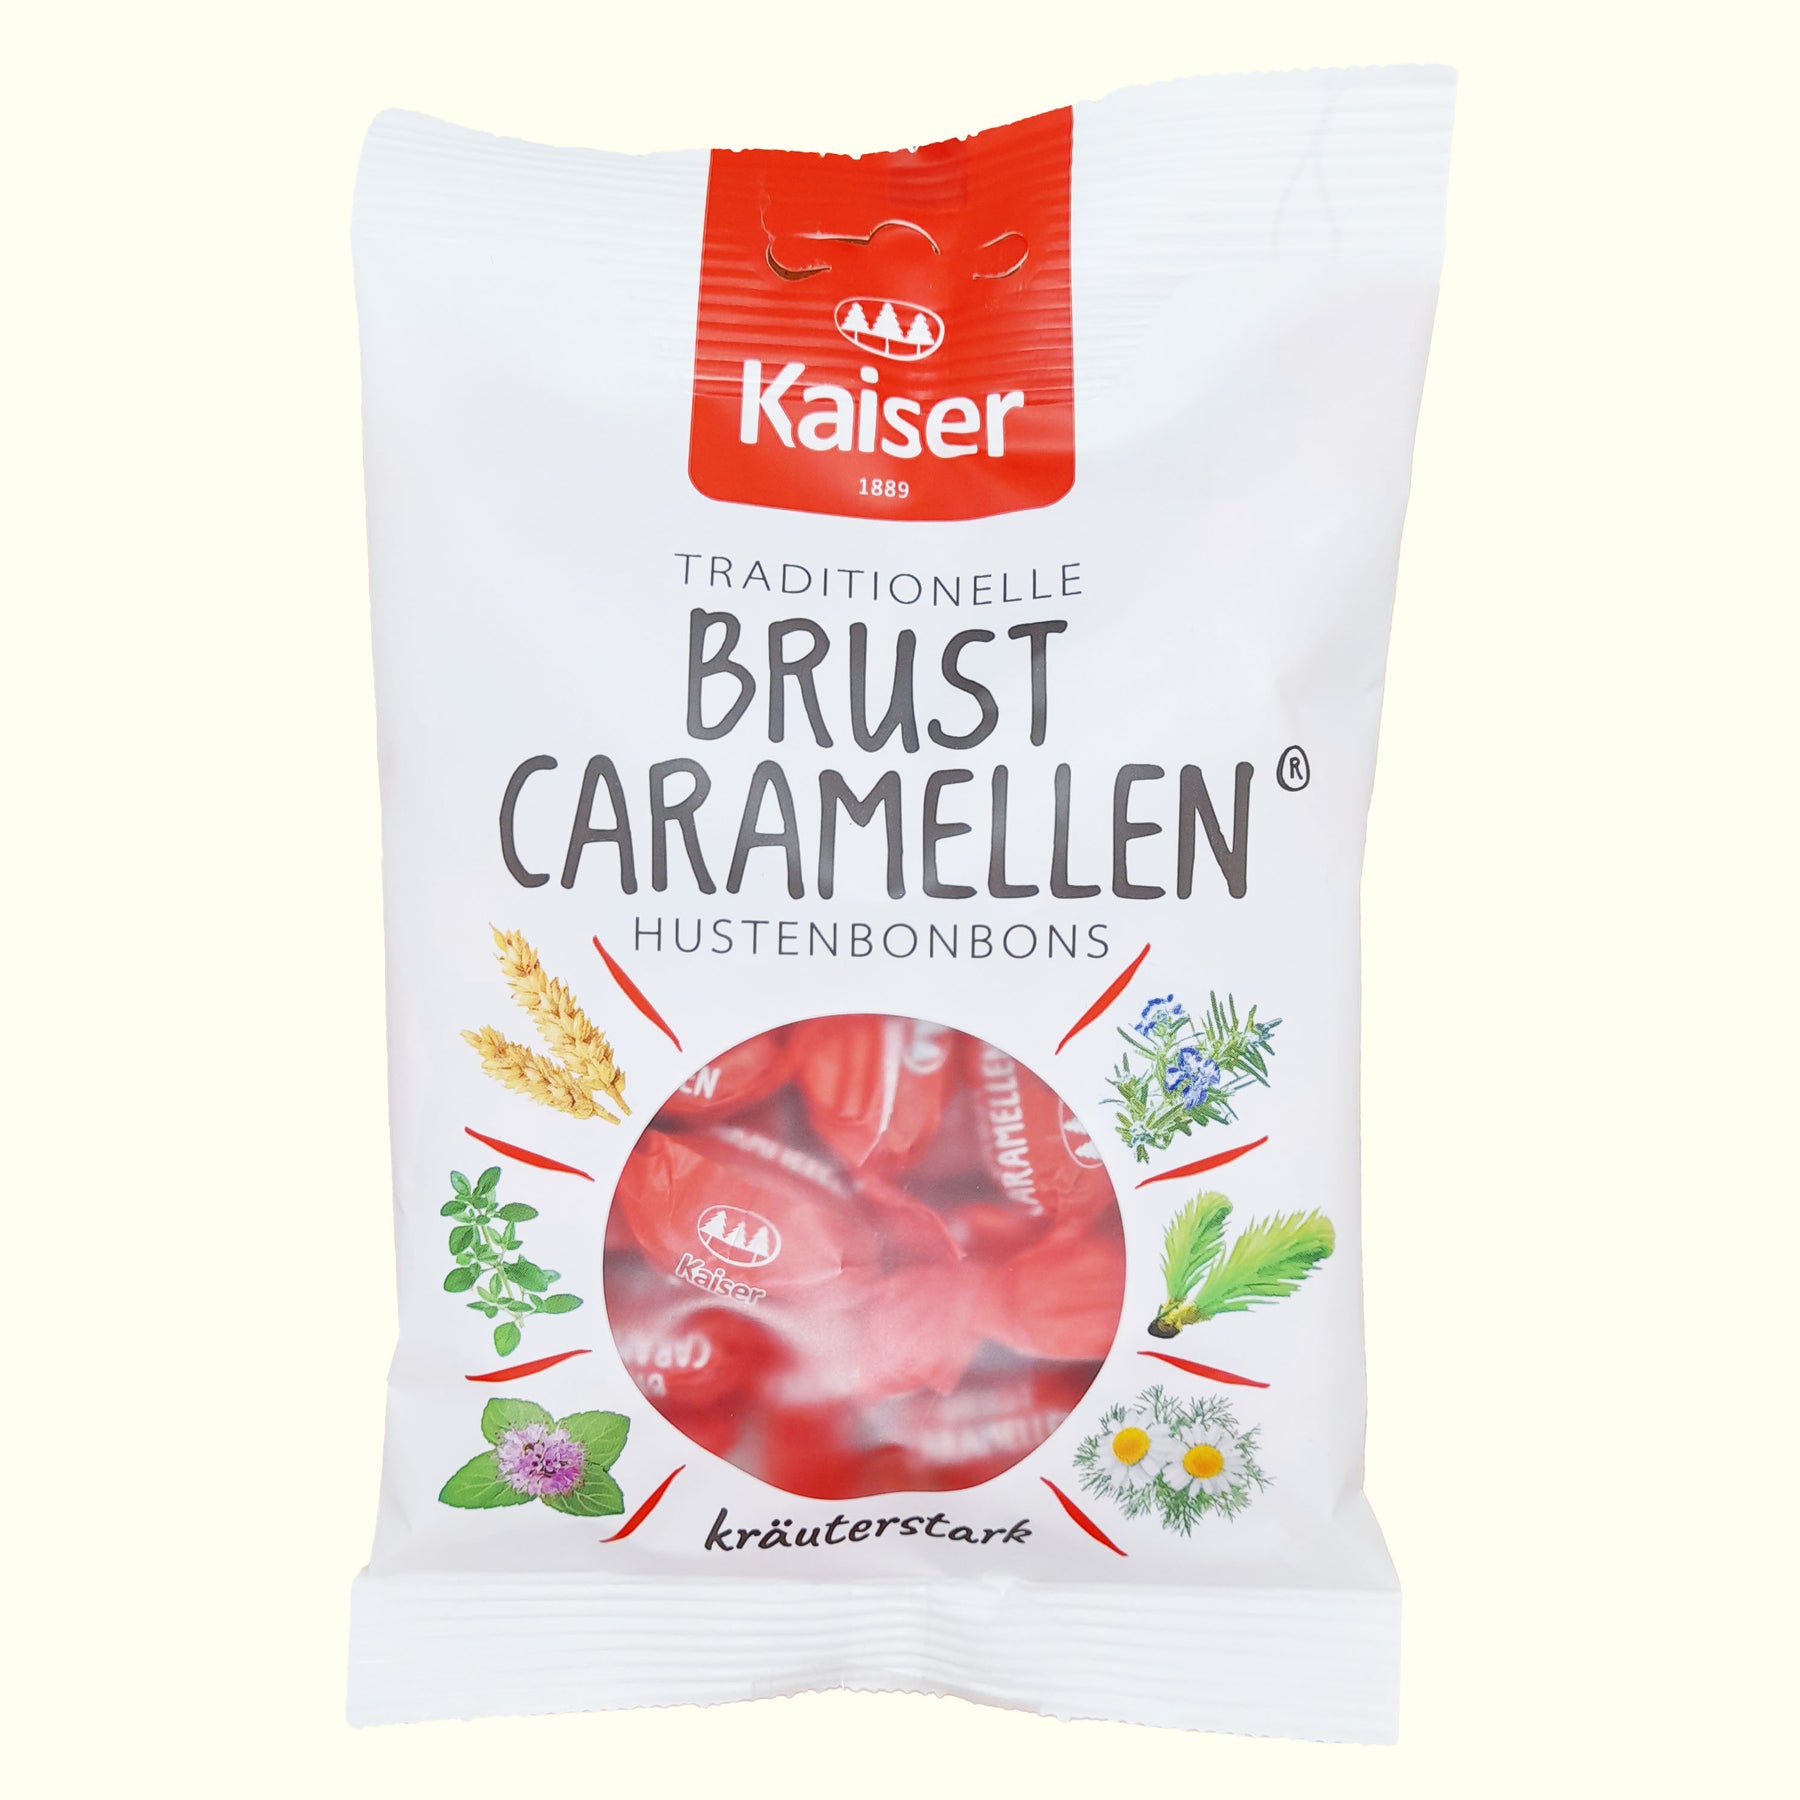 Kaiser Traditionelle Brust Caramellen Hustenbonbons - 100g